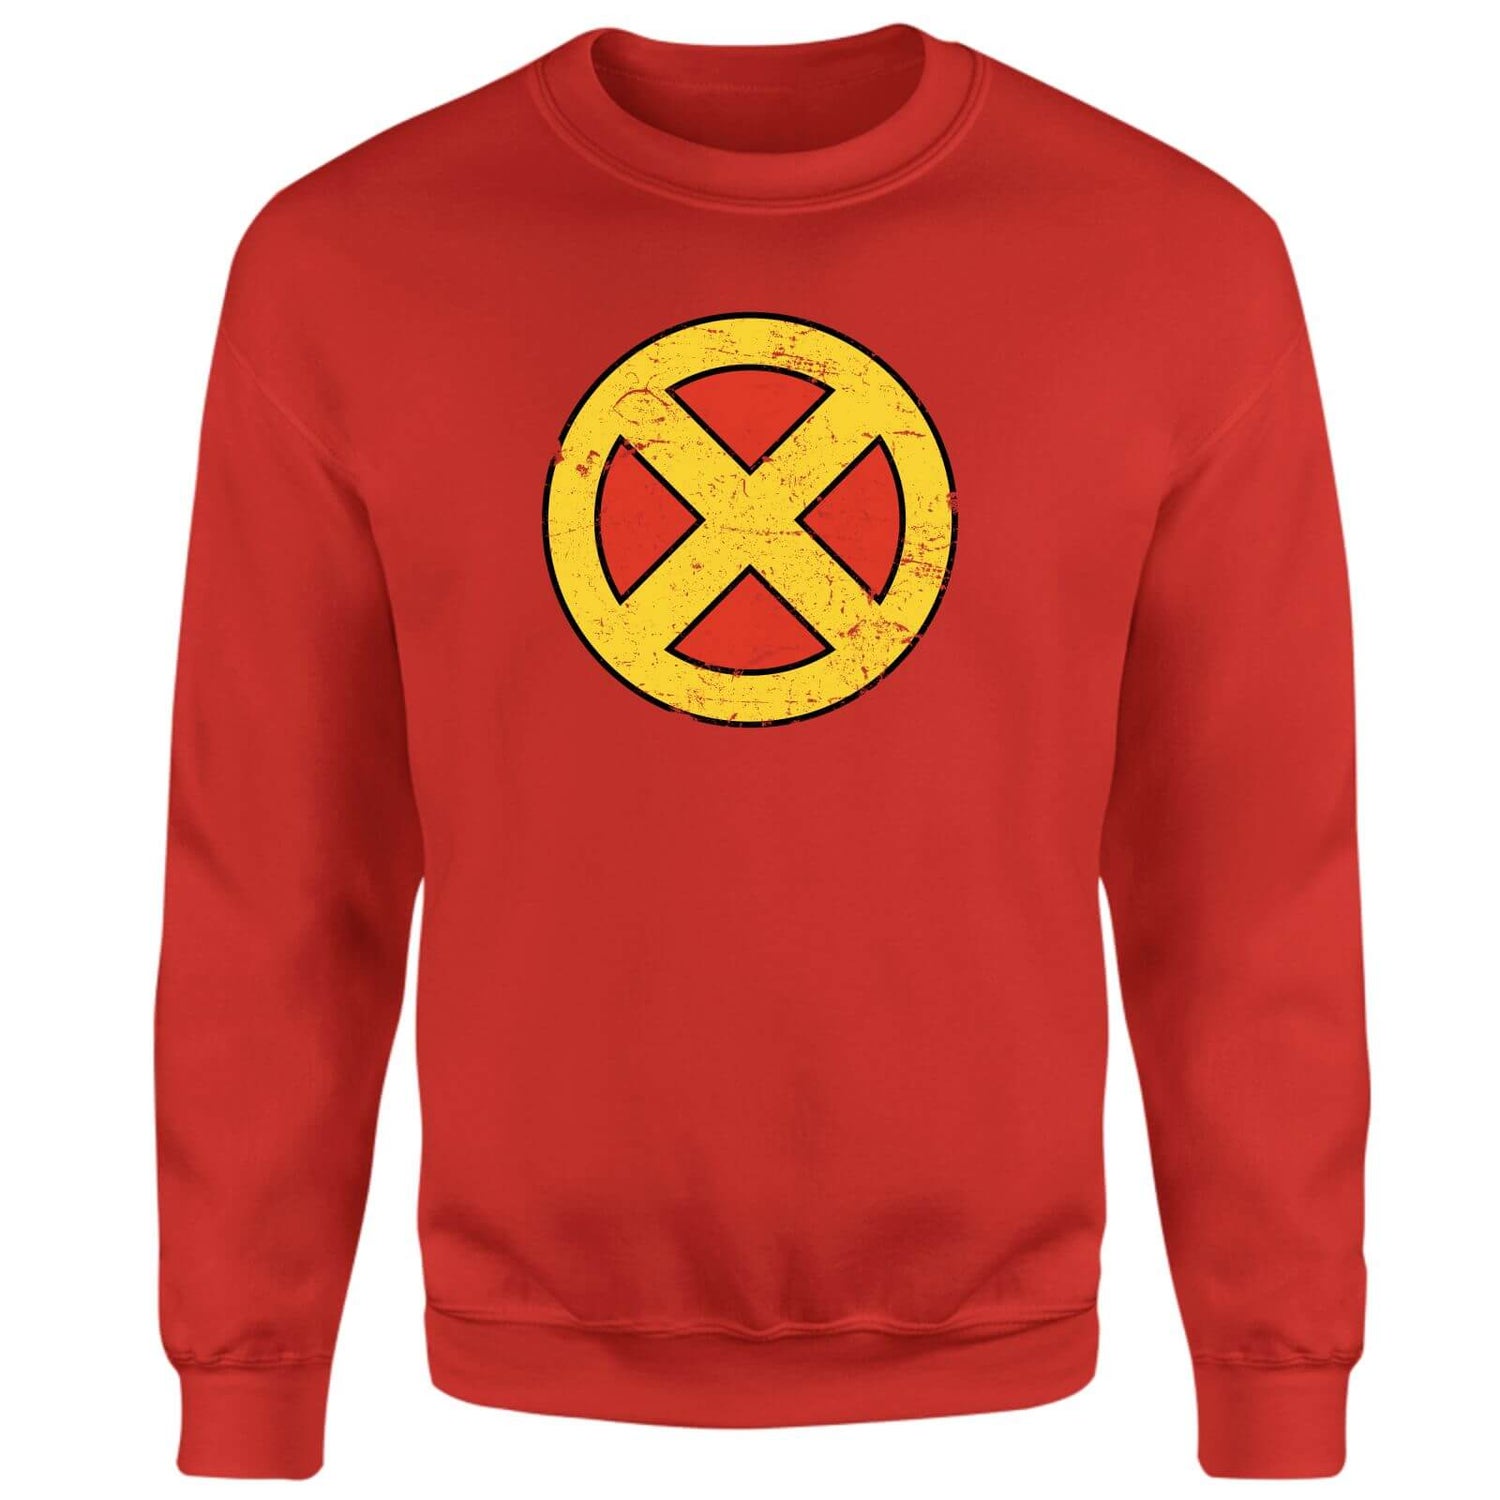 X-Men Emblem Sweatshirt - Red